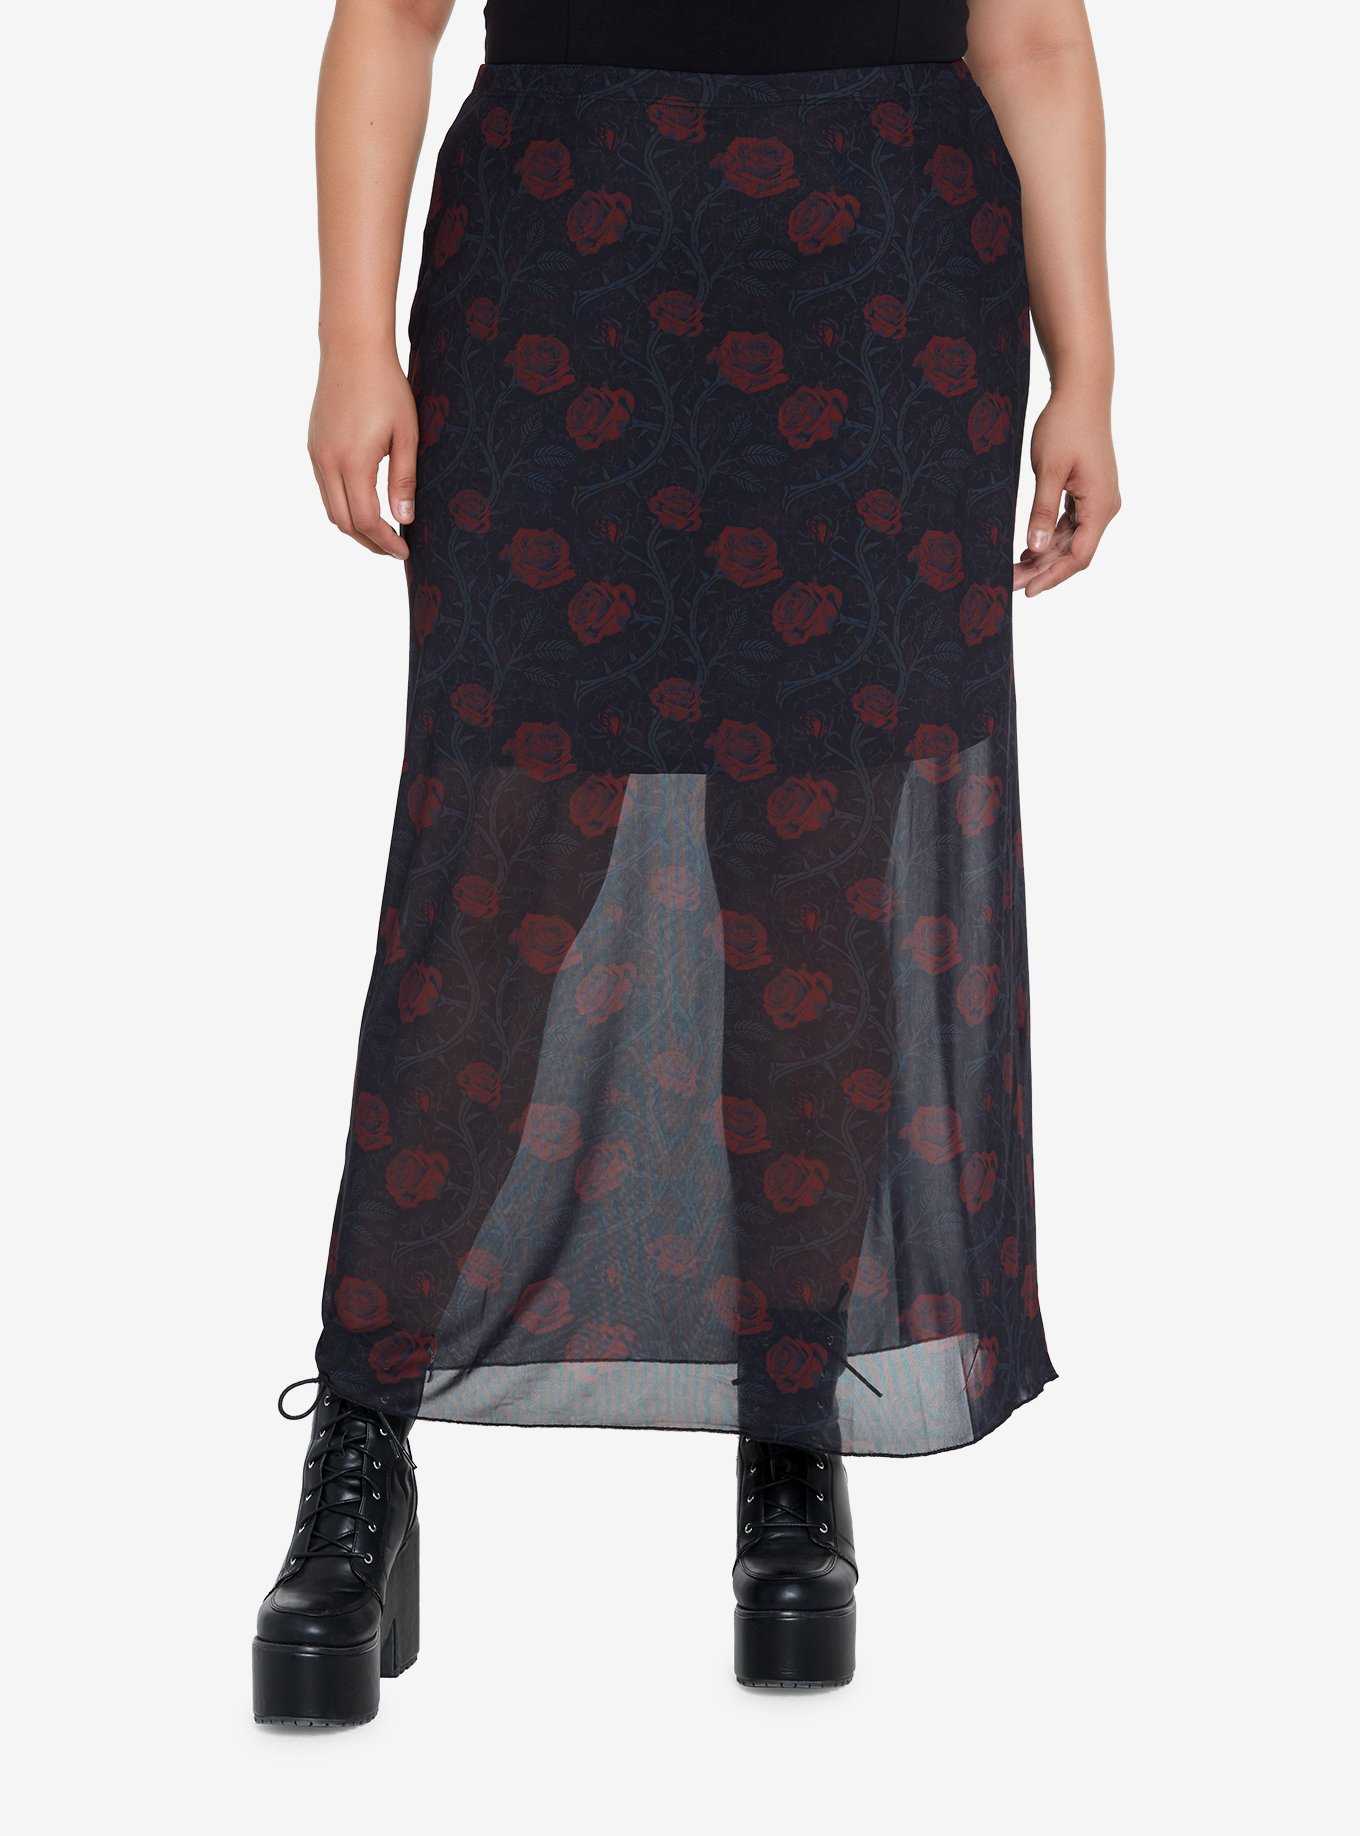 Red Rose Mesh Maxi Skirt Plus Size, , hi-res